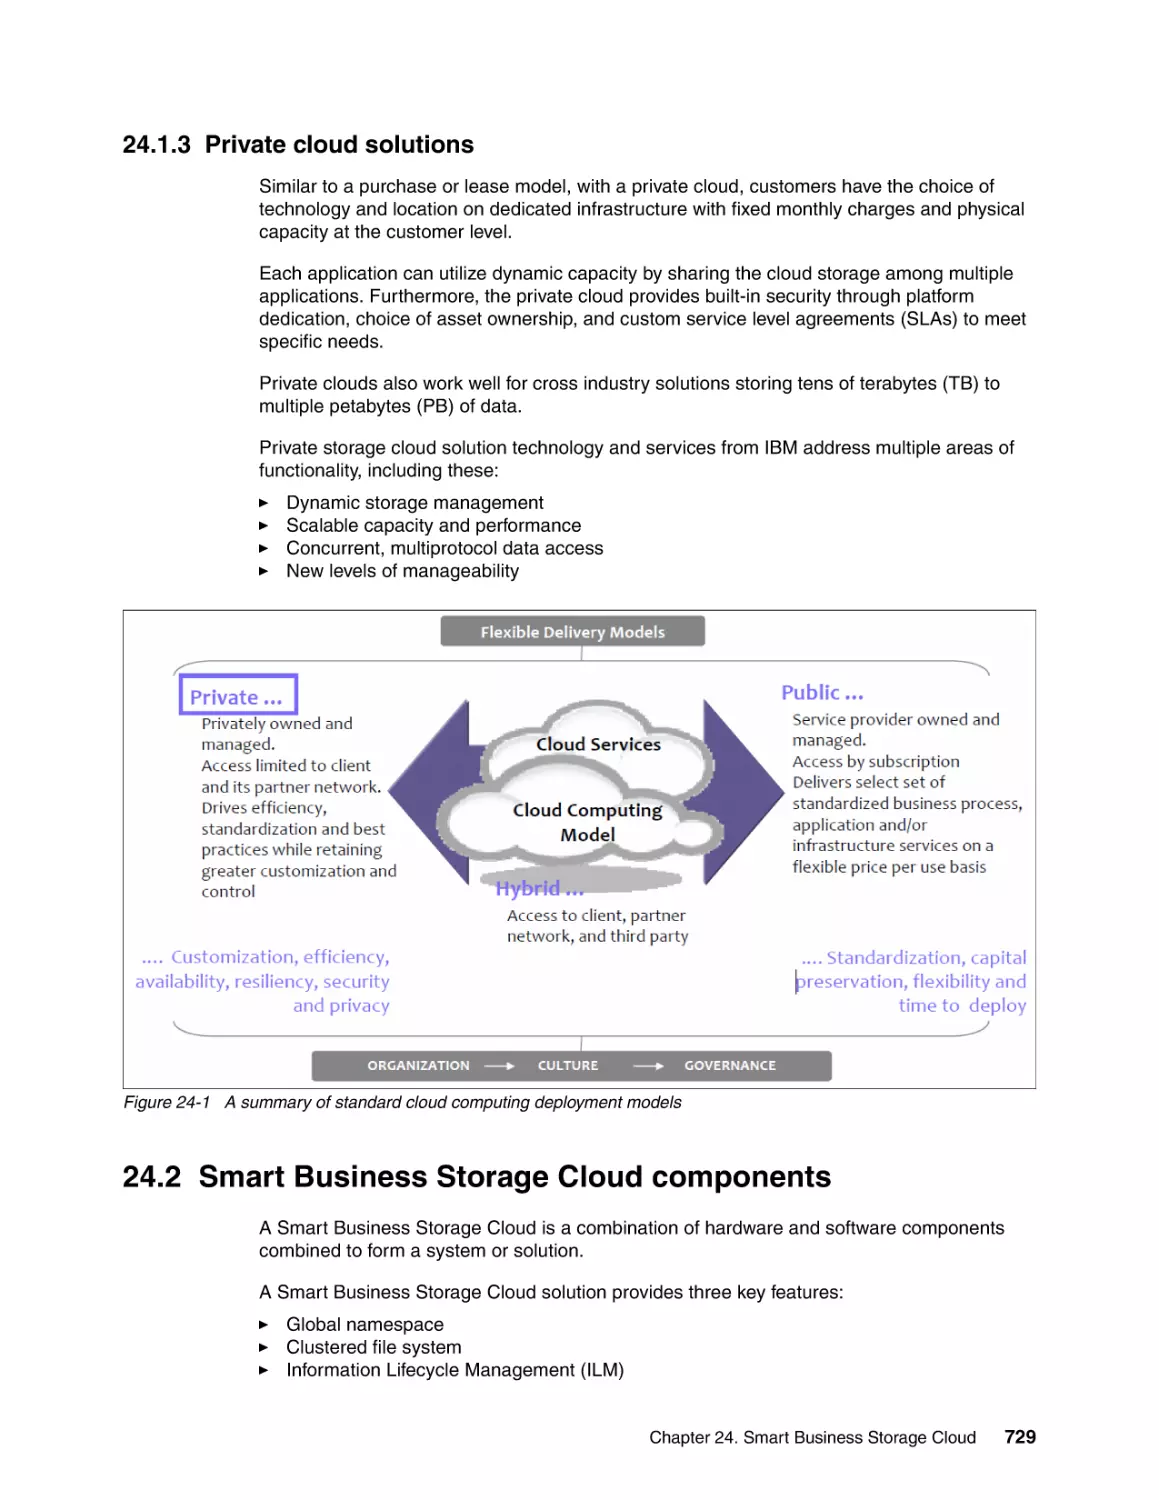 24.1.3 Private cloud solutions
24.2 Smart Business Storage Cloud components